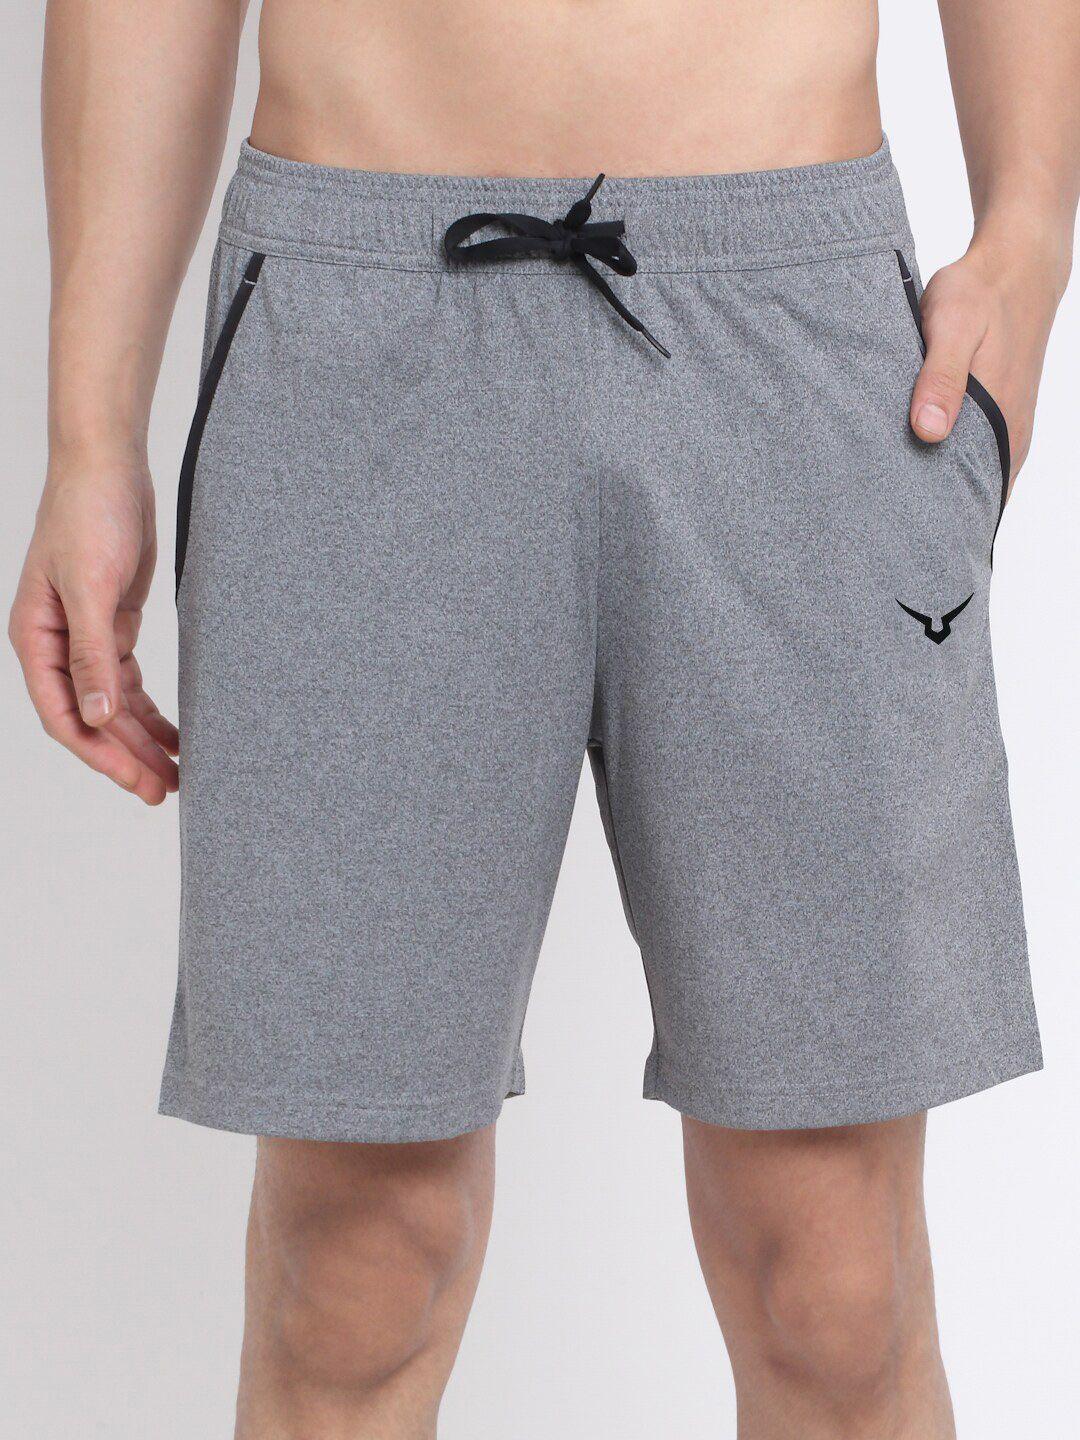 invincible men grey running sports shorts